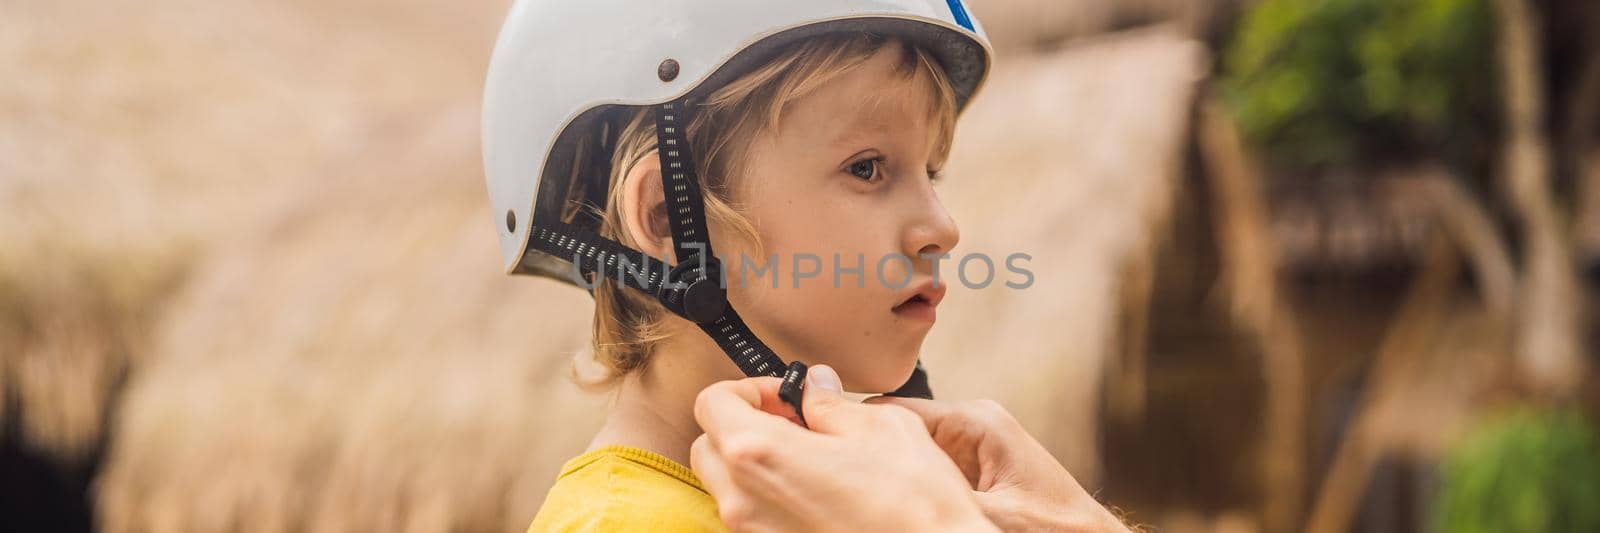 Trainer helps the boy to wear helmet before training skate board BANNER, LONG FORMAT by galitskaya